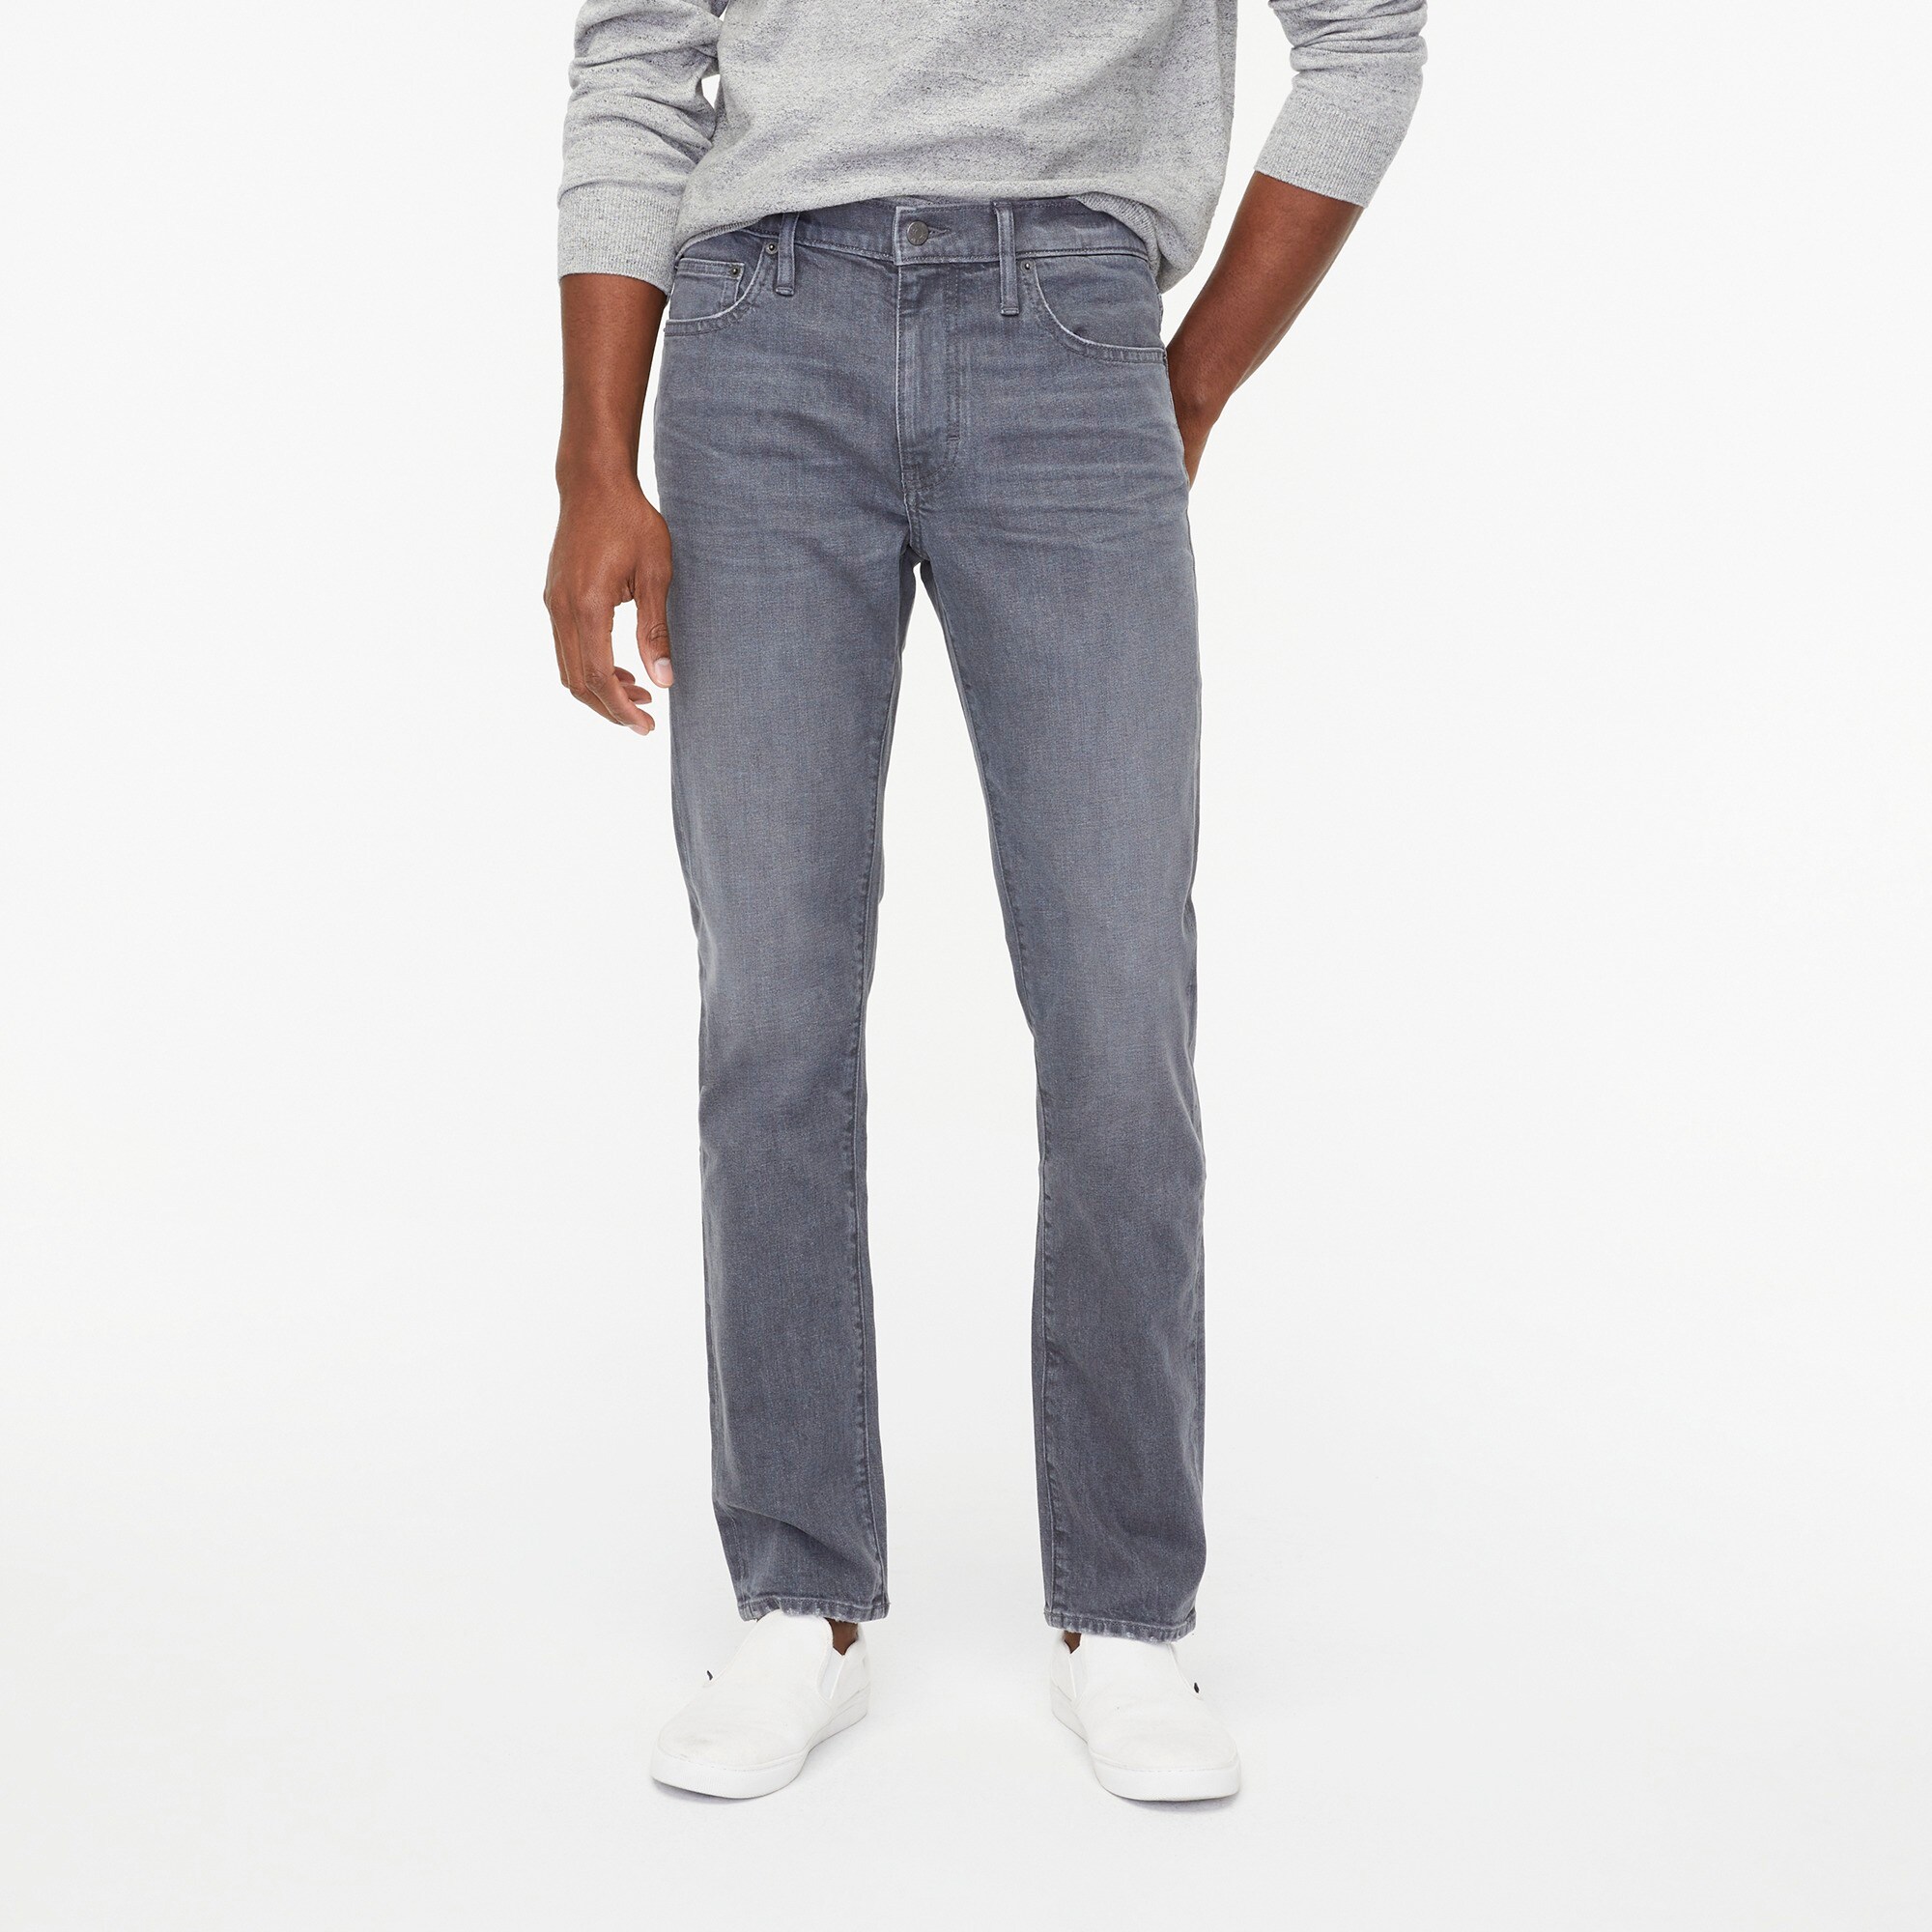  Straight-fit grey jean in signature flex